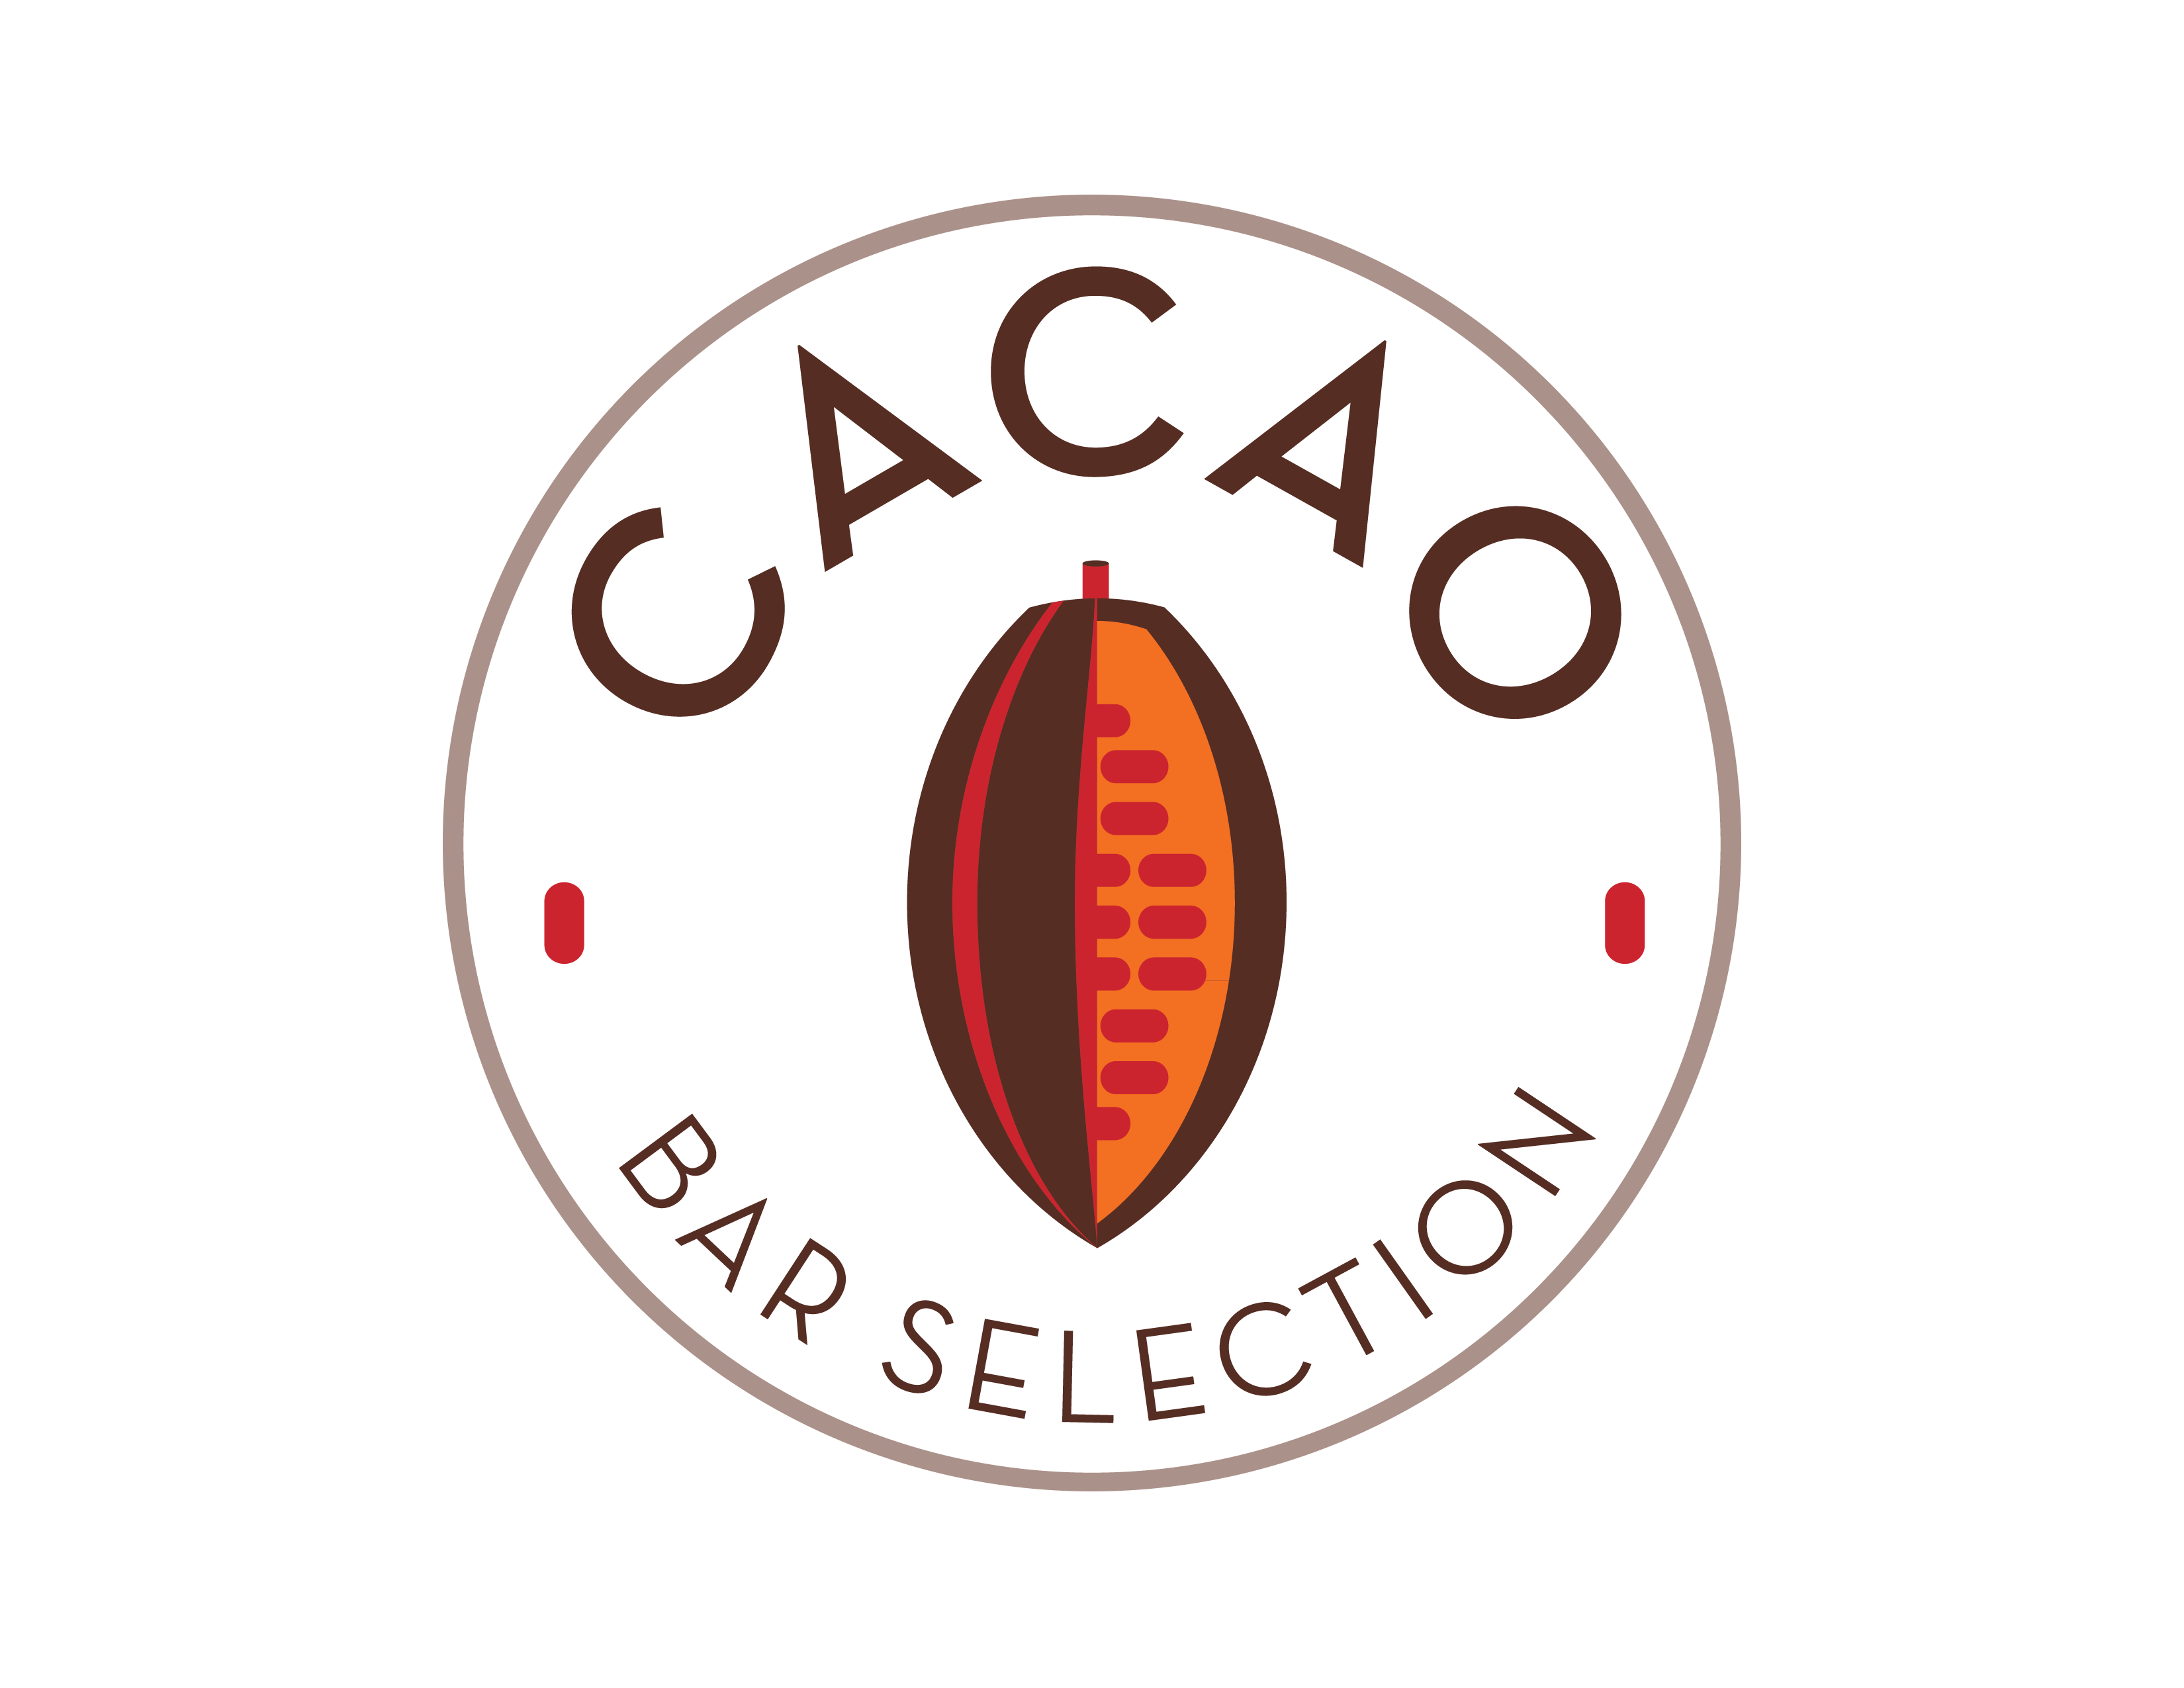 (c) Cacaobarselection.wordpress.com